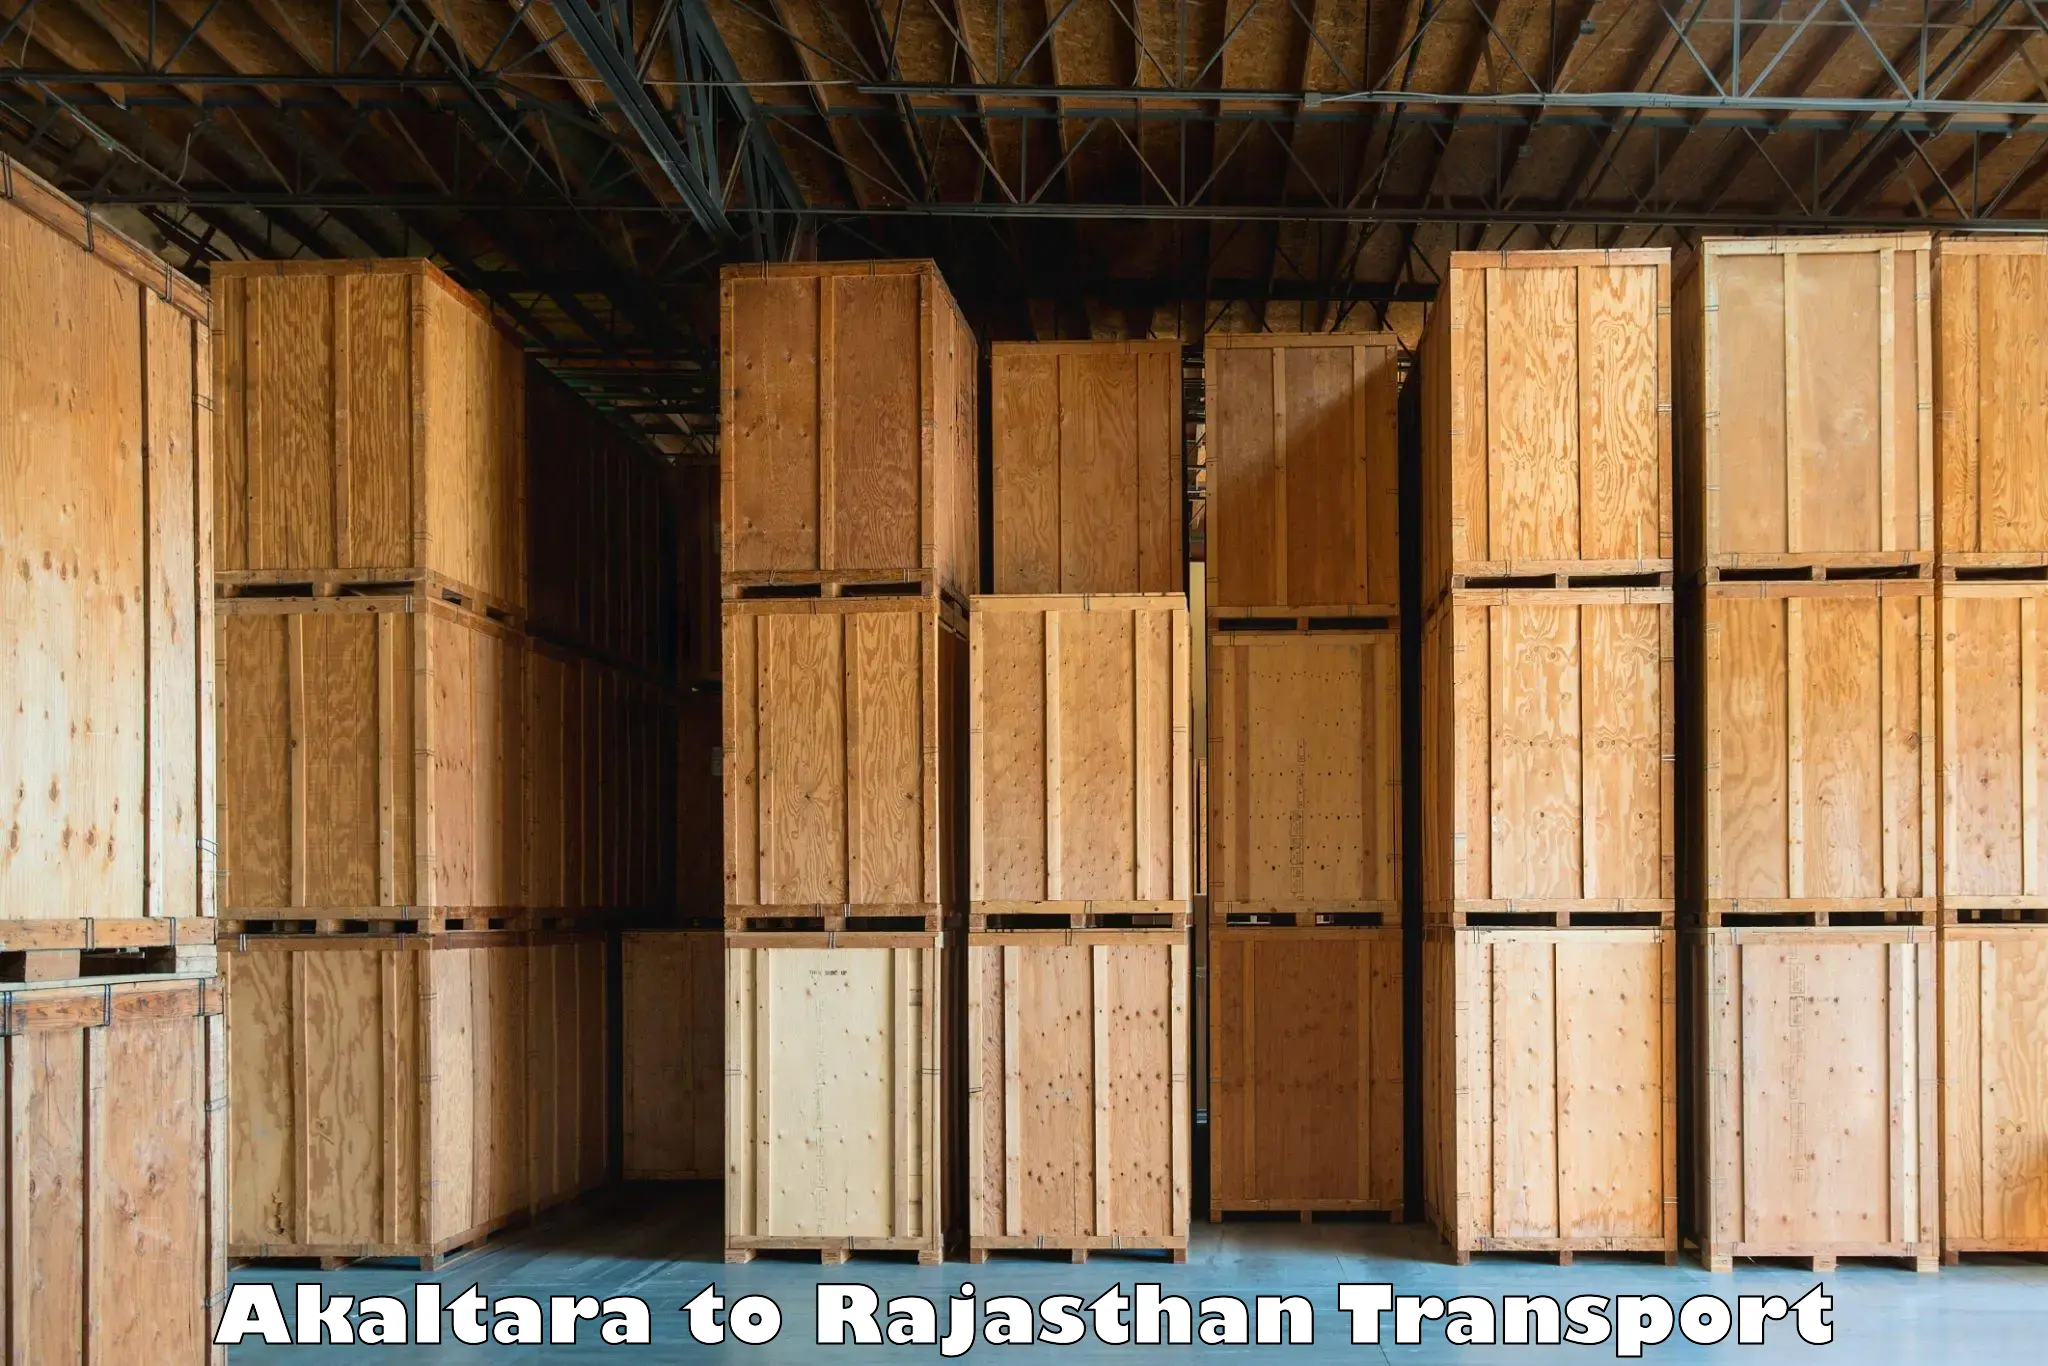 Daily parcel service transport Akaltara to Pokhran